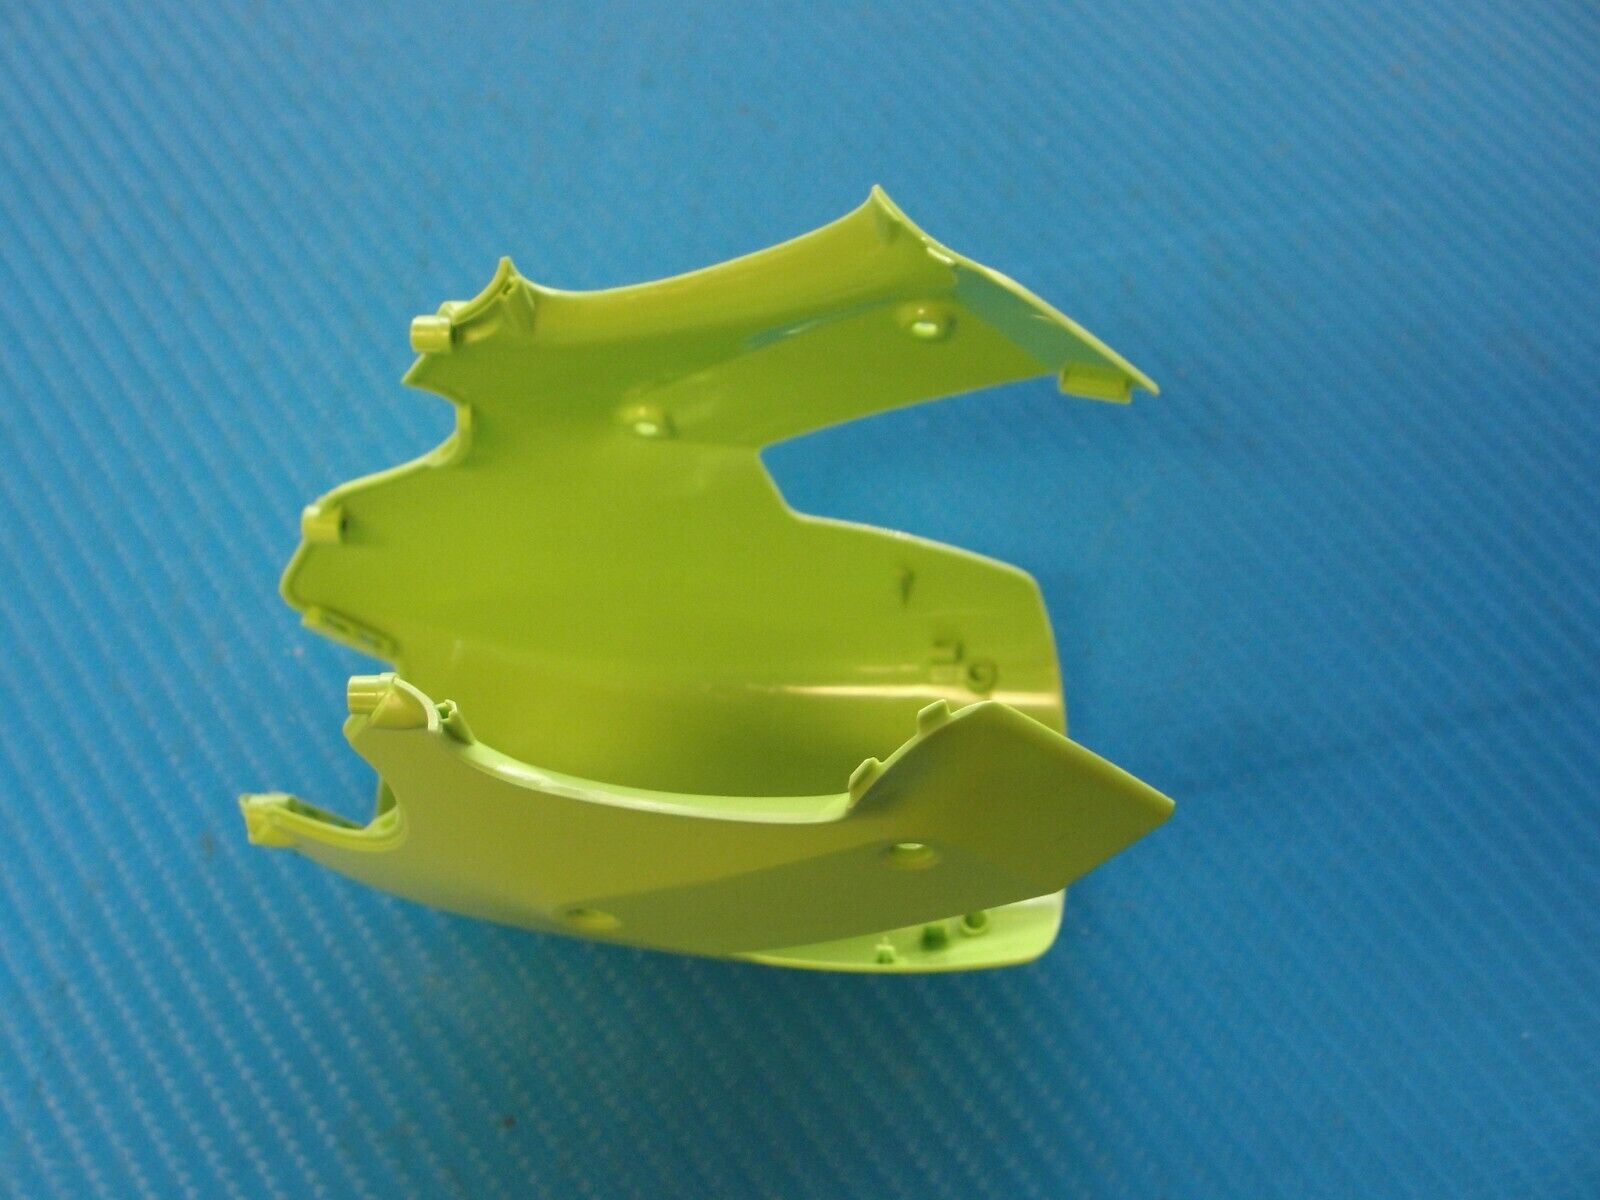 Genuine DJI FPV Drone Upper Shell Protective Cover Plastic Green/#2